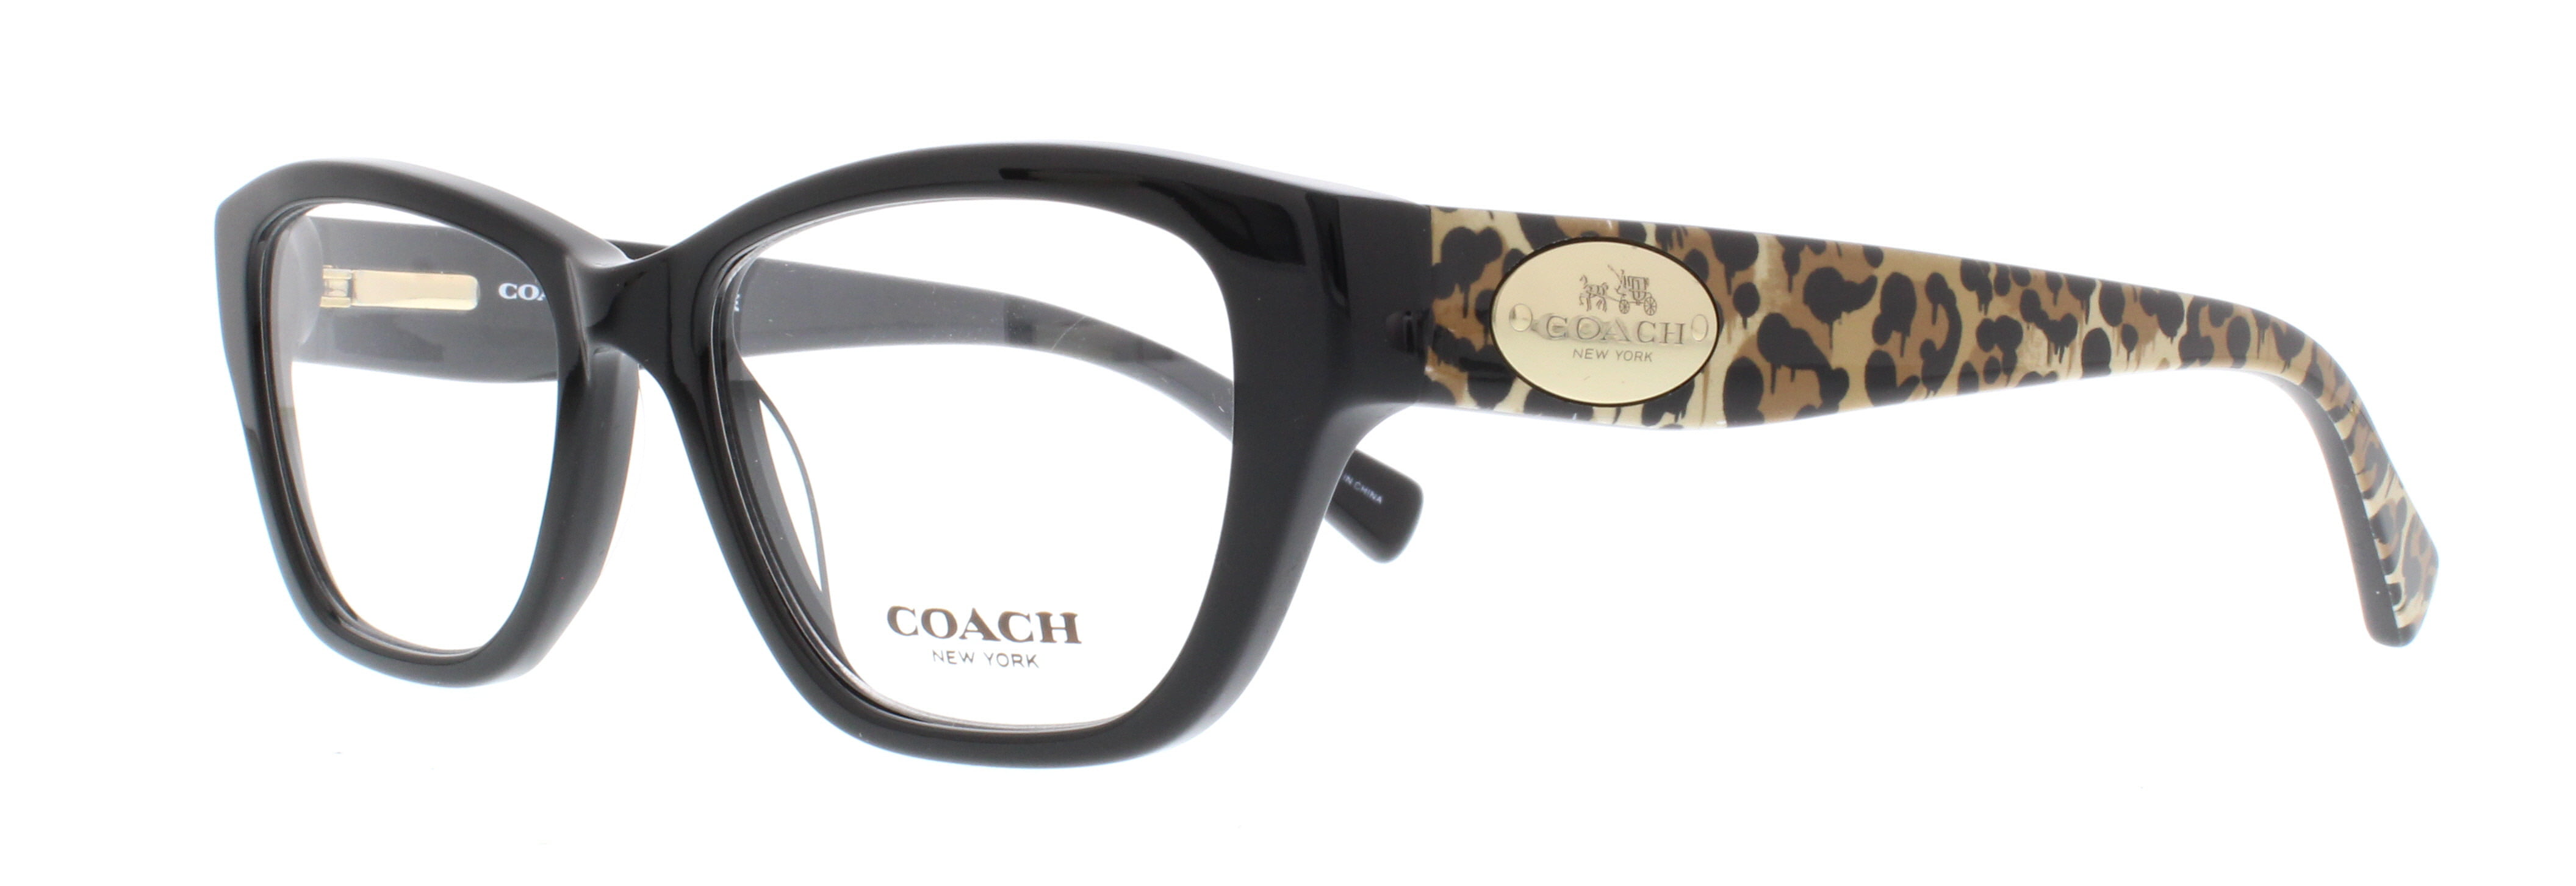 coach lens frames > Purchase - 57%